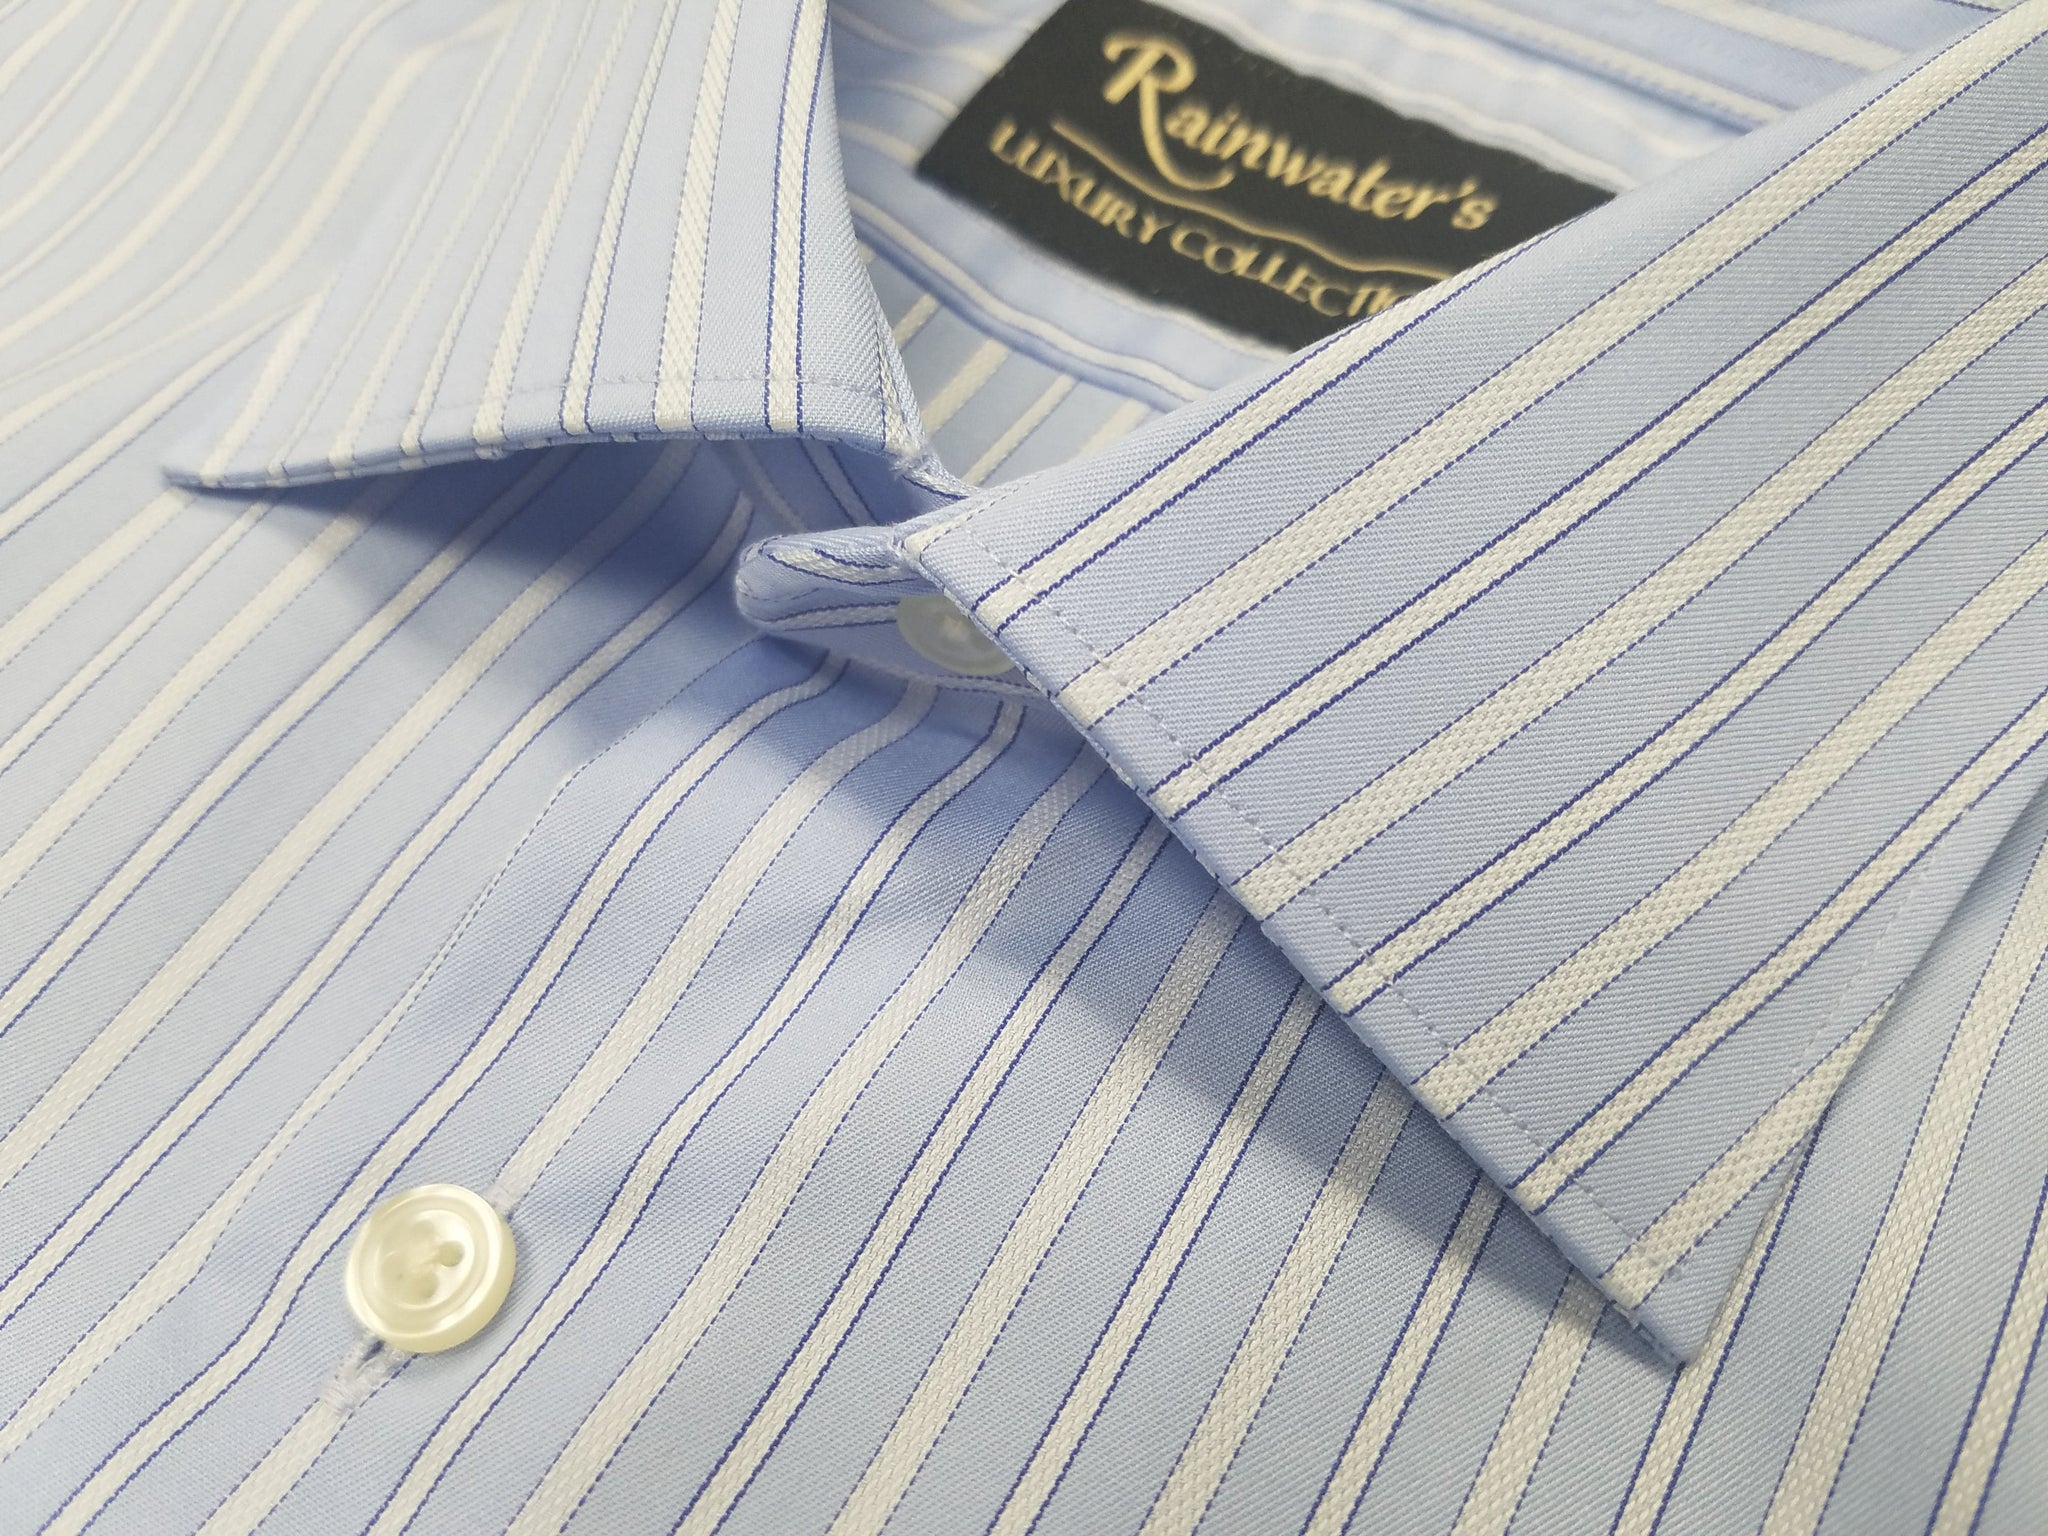 Rainwater's Luxury Collection Light Blue Striped Dress Shirt - Rainwater's Men's Clothing and Tuxedo Rental